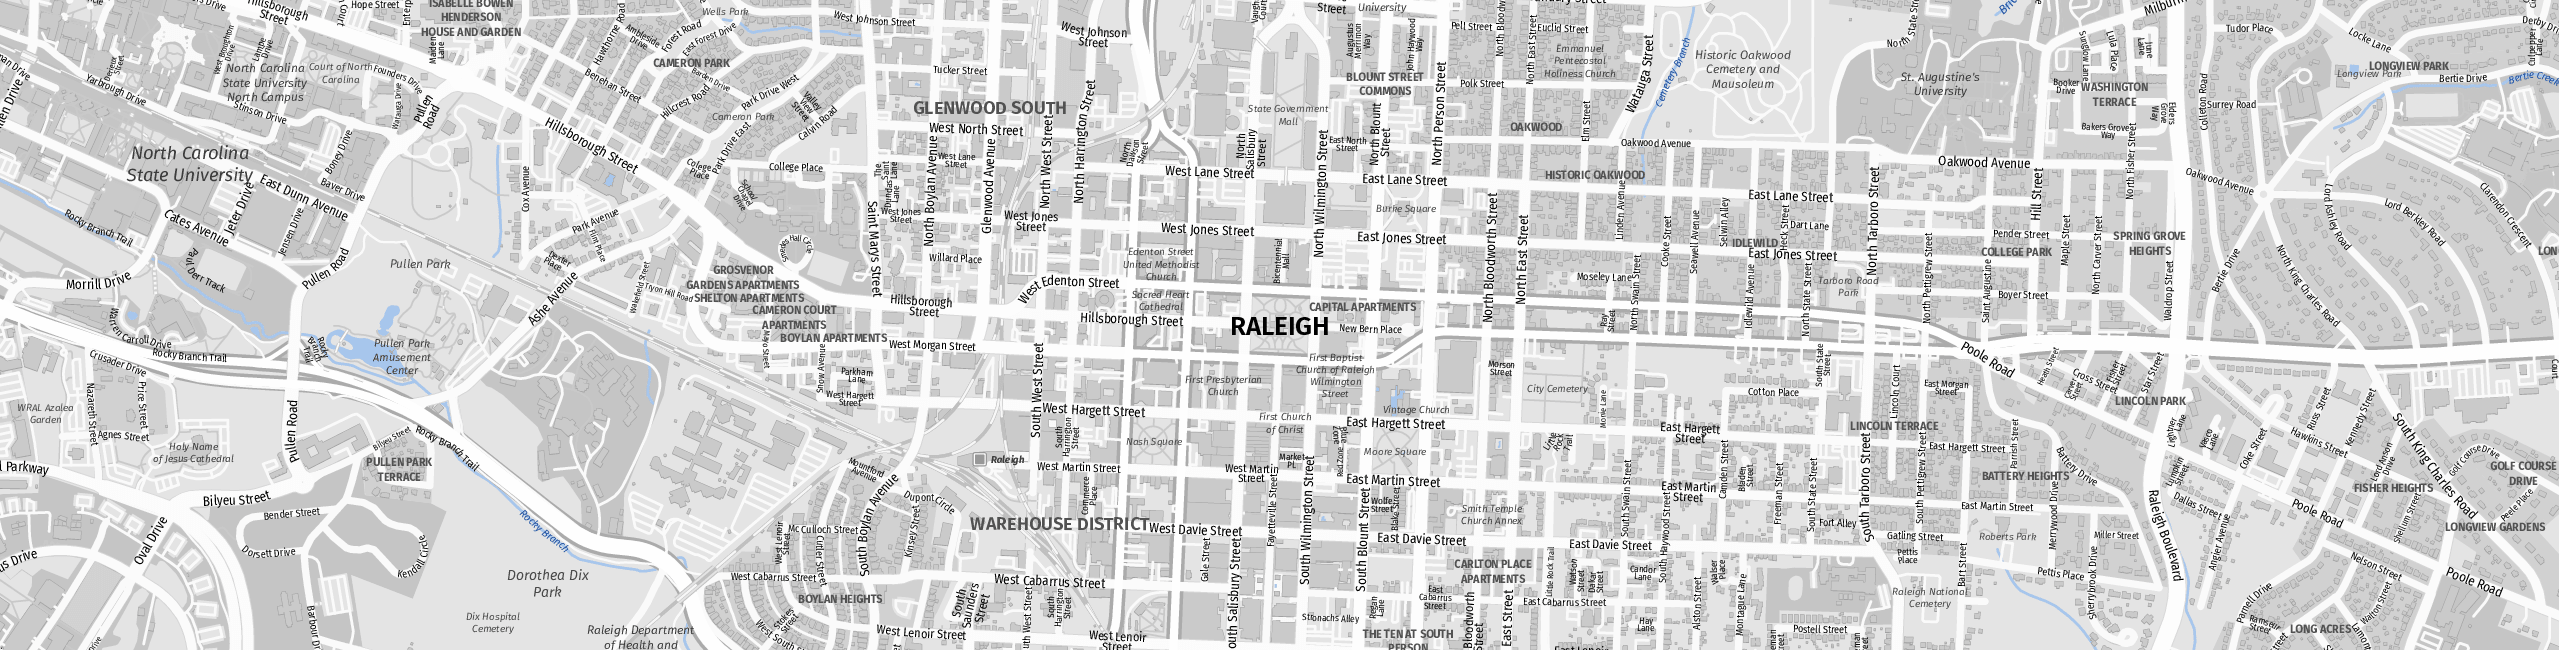 Stadtplan Raleigh zum Downloaden.